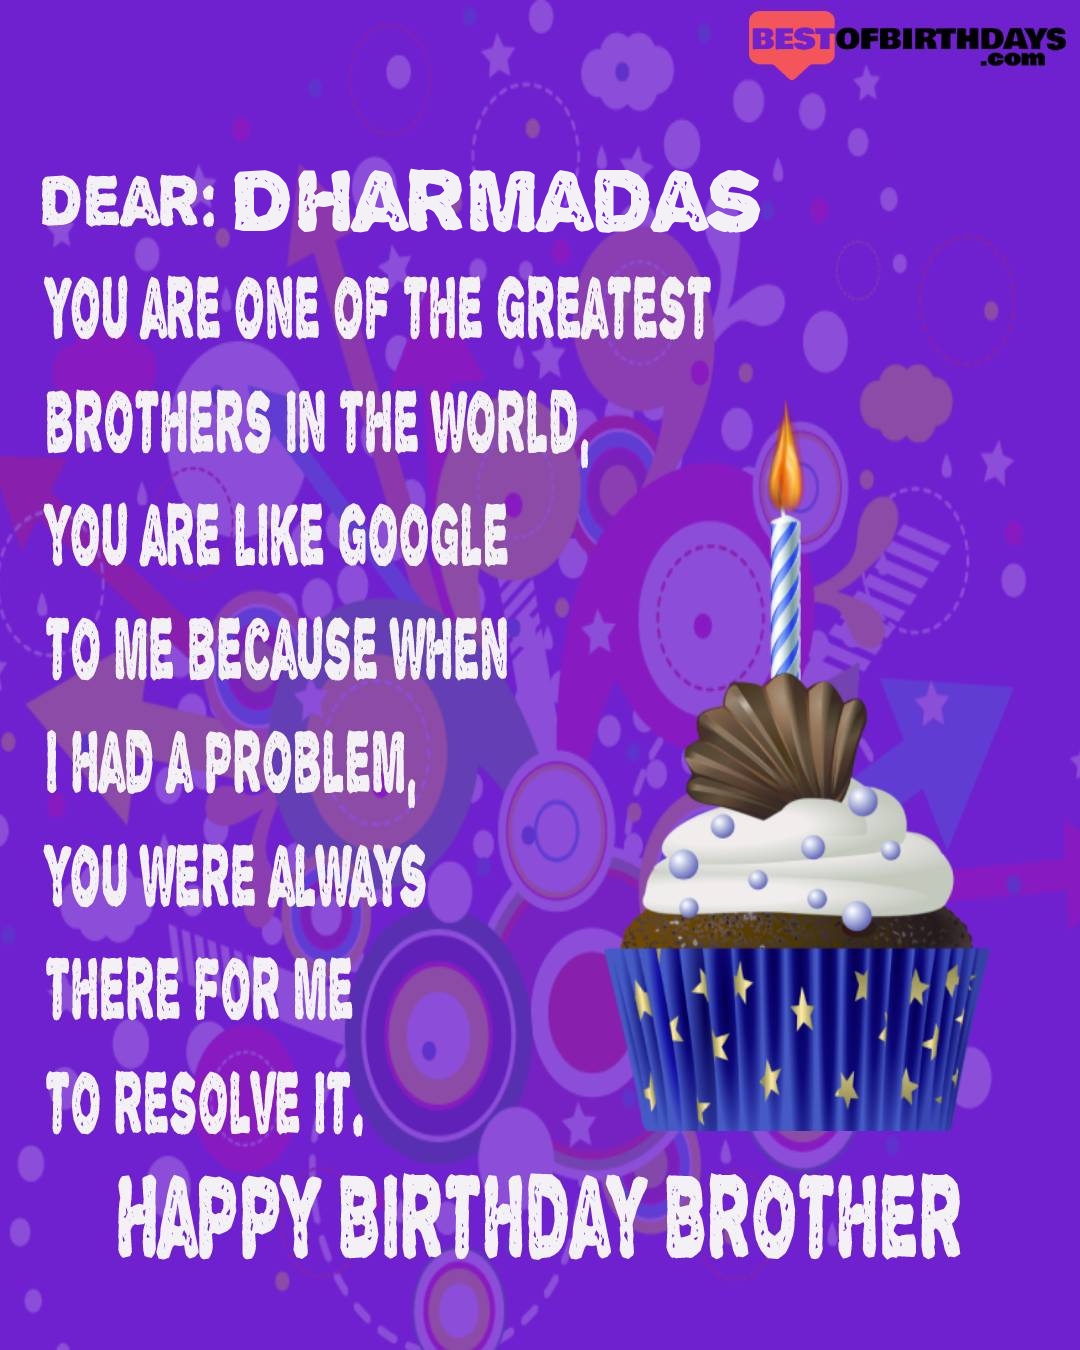 Happy birthday dharmadas bhai brother bro